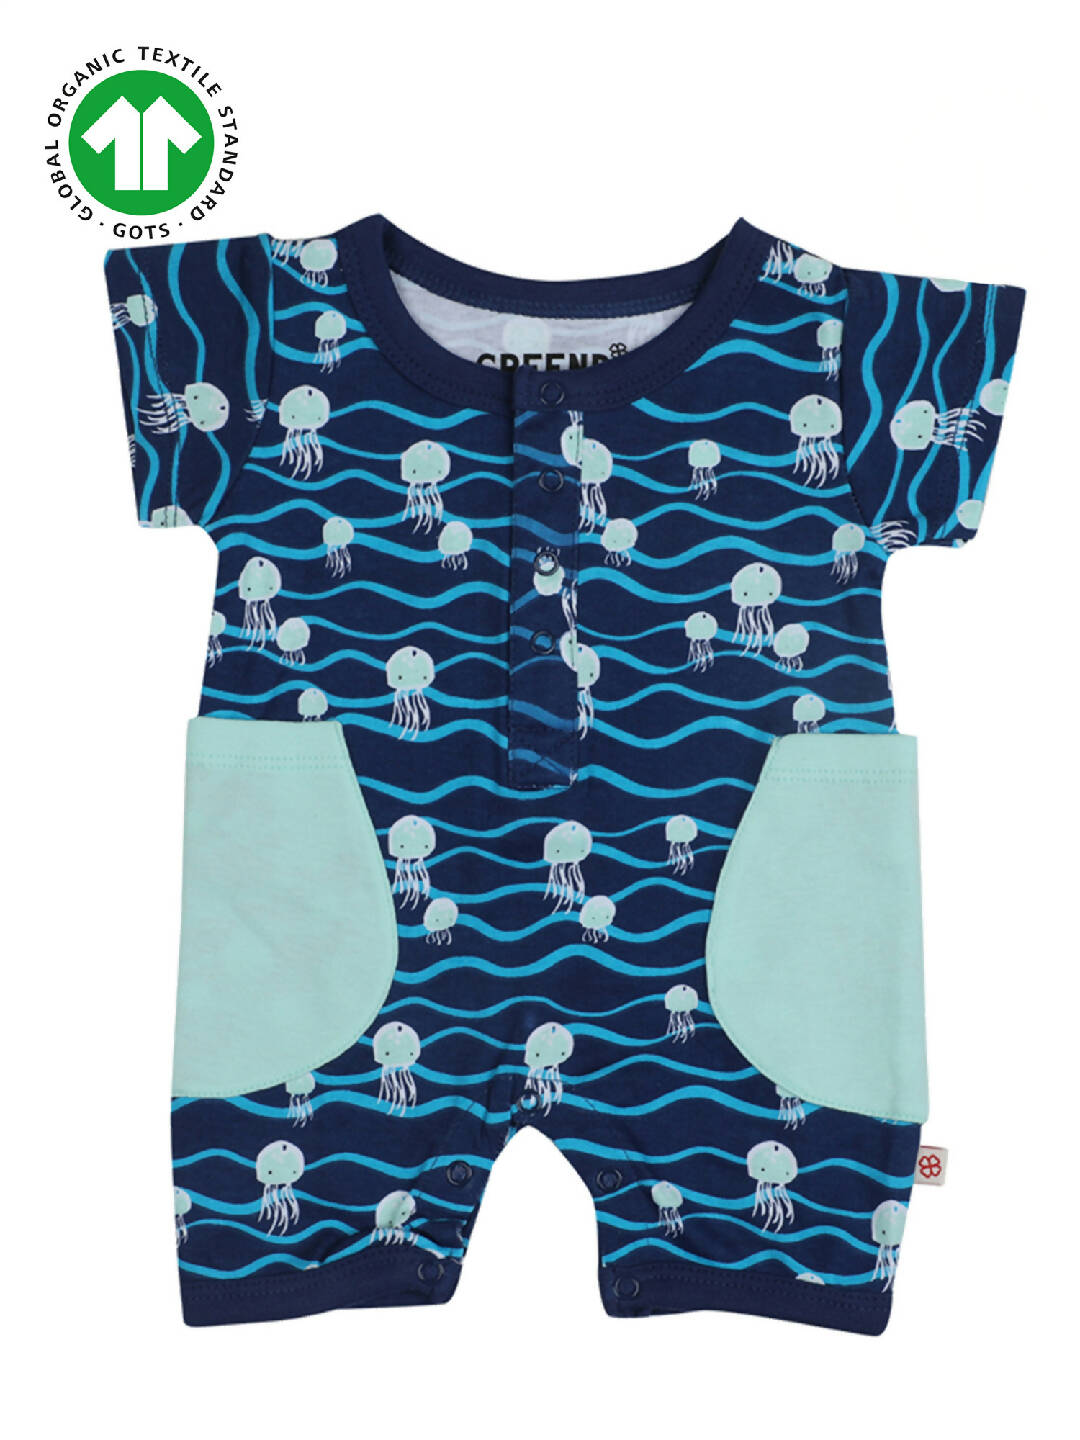 Blue Organic Cotton Bodysuit for Baby Boy